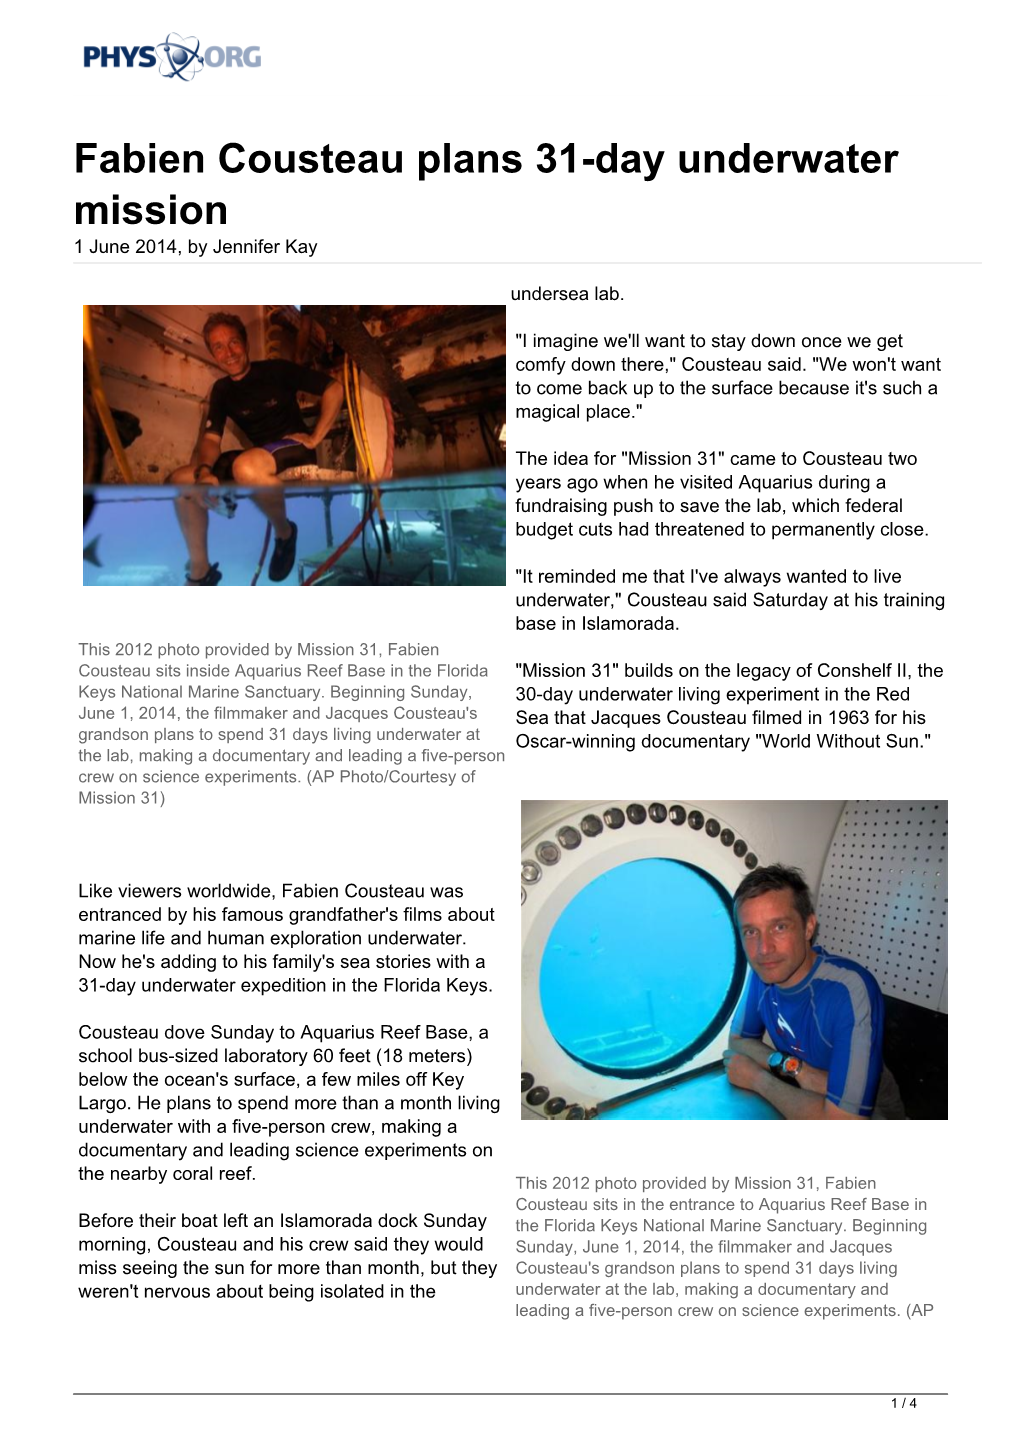 Fabien Cousteau Plans 31-Day Underwater Mission 1 June 2014, by Jennifer Kay